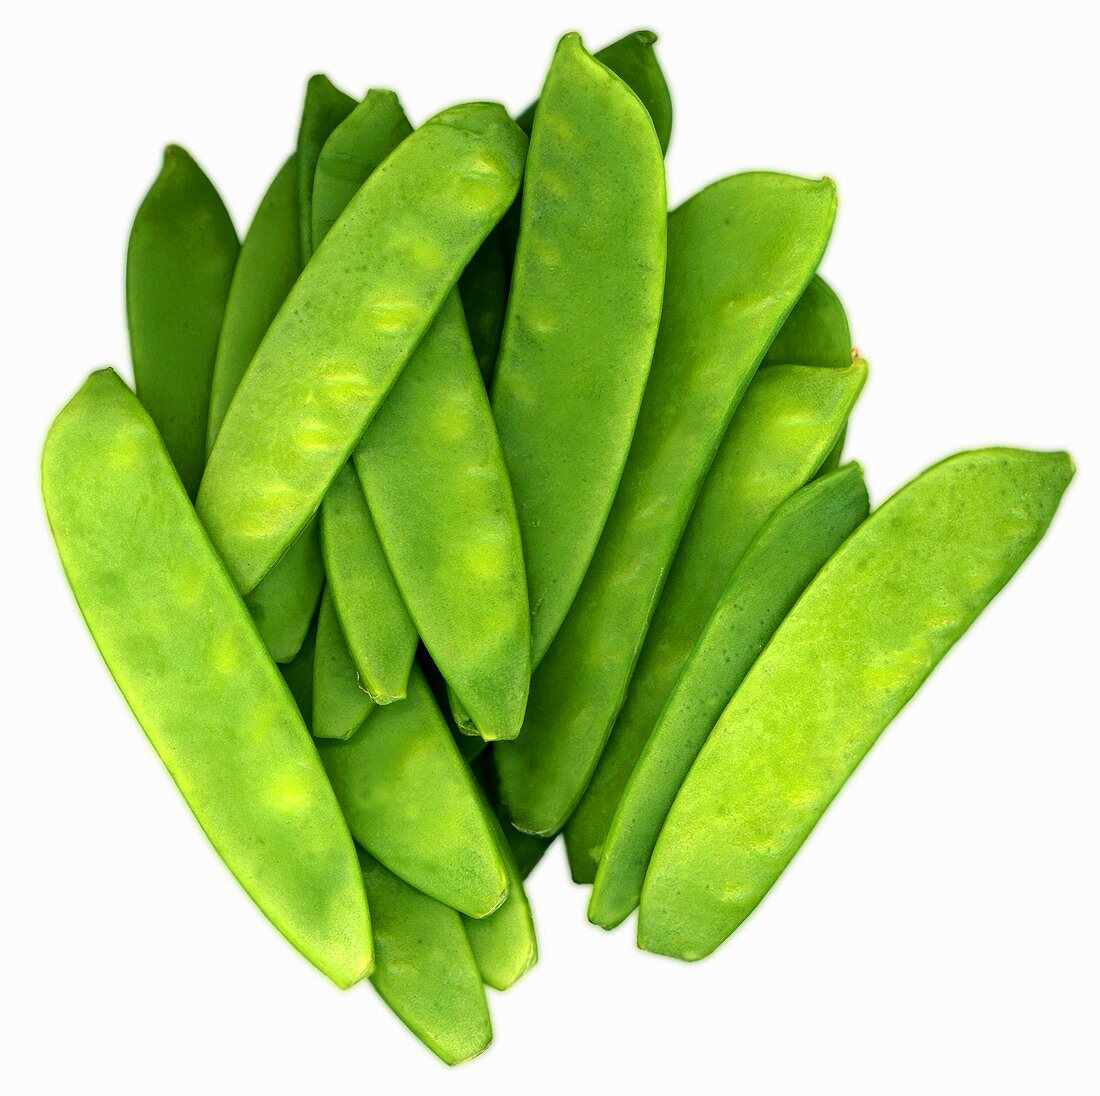 Several mangetout peas